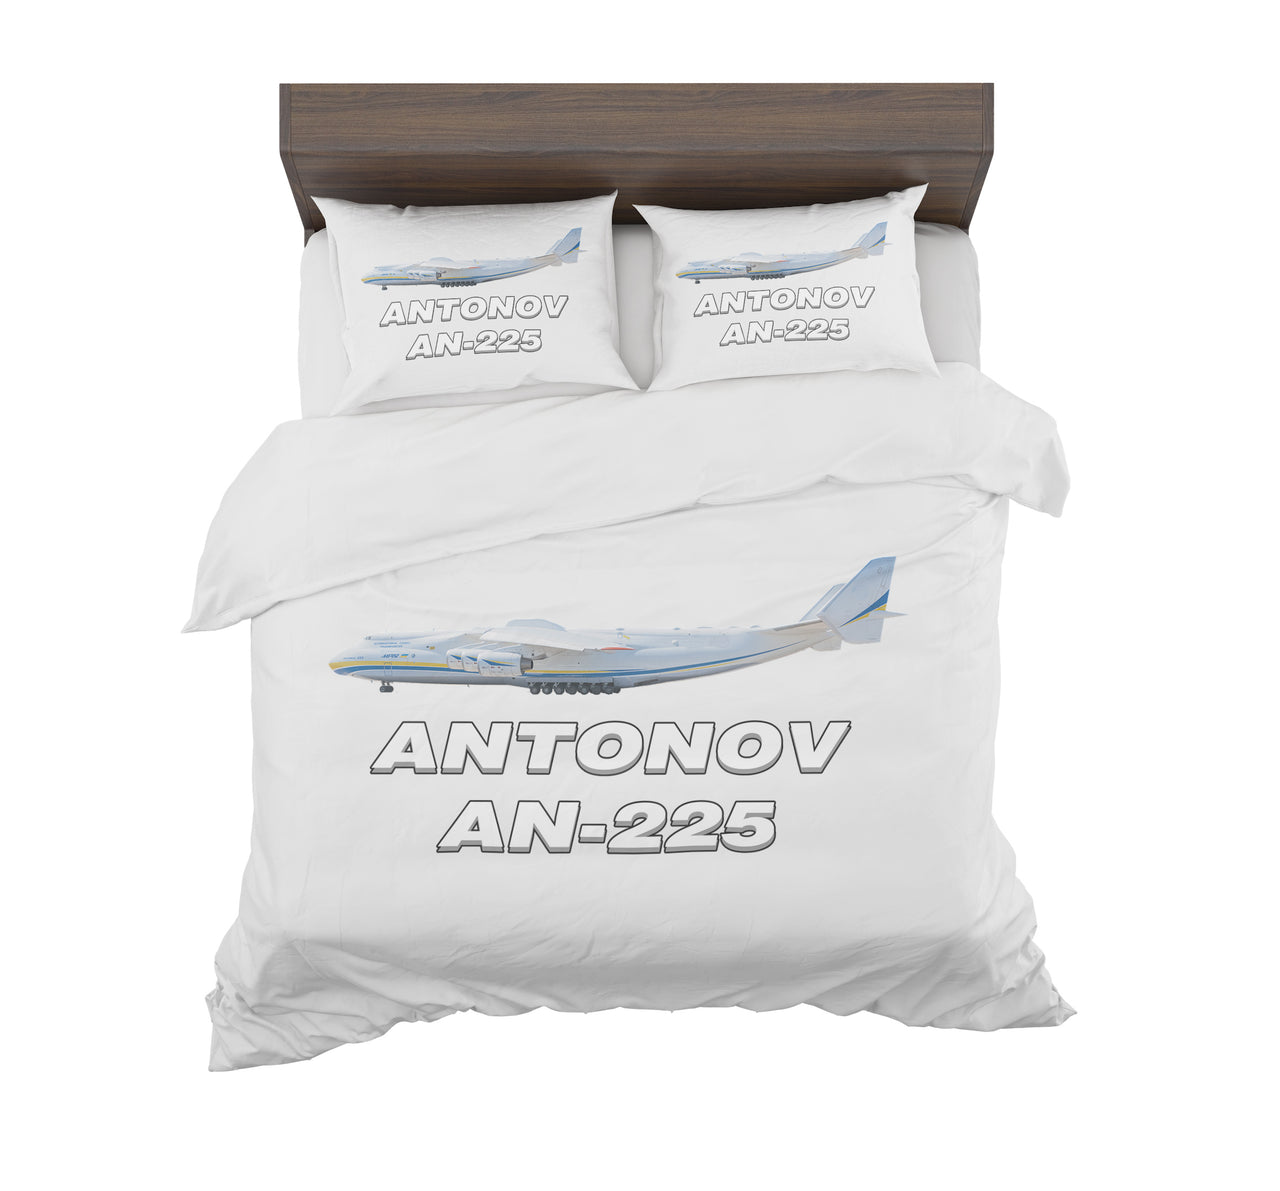 The Antonov AN-225 Designed Bedding Sets